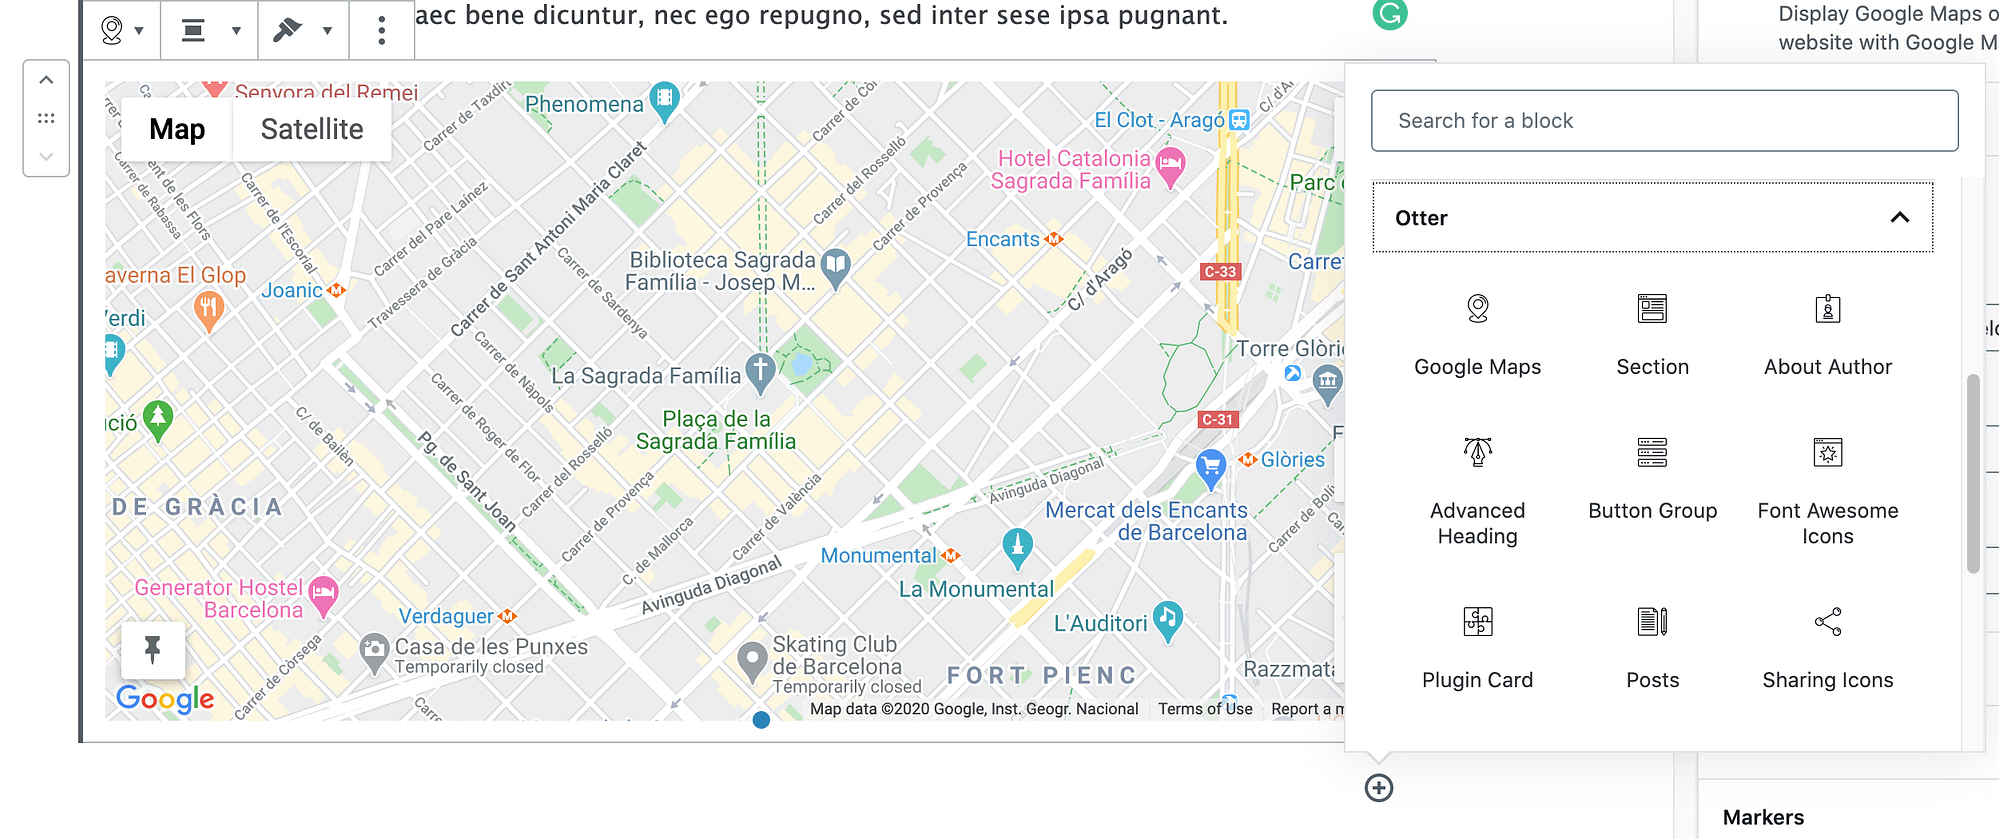 Google Map Block options in Otter Blocks.